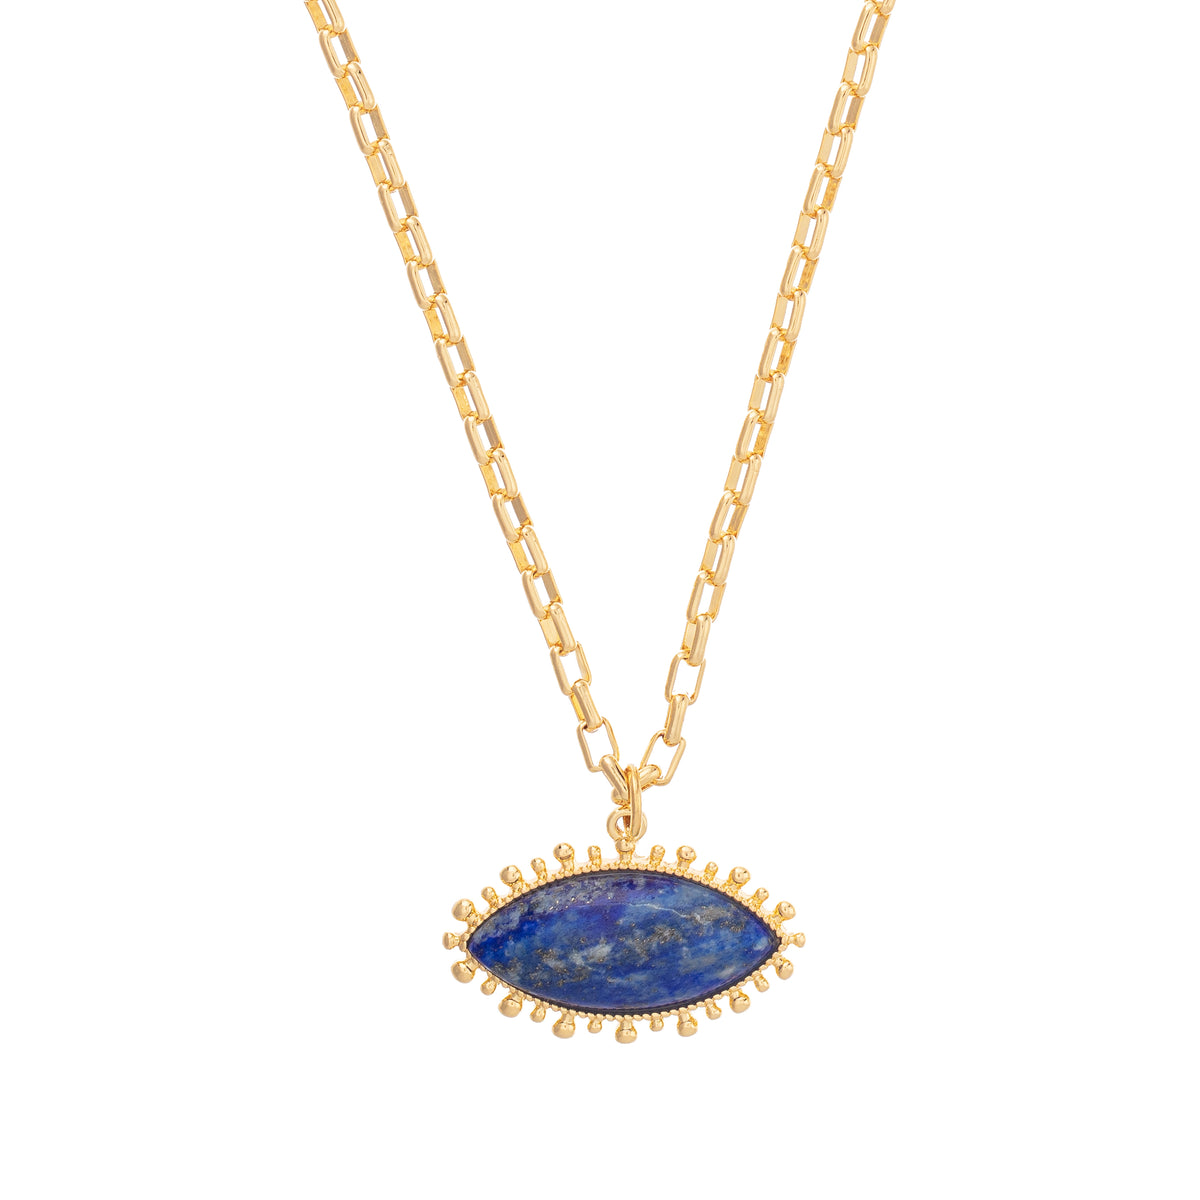 Evil eye lapis lazuli pendant necklace in gold plate